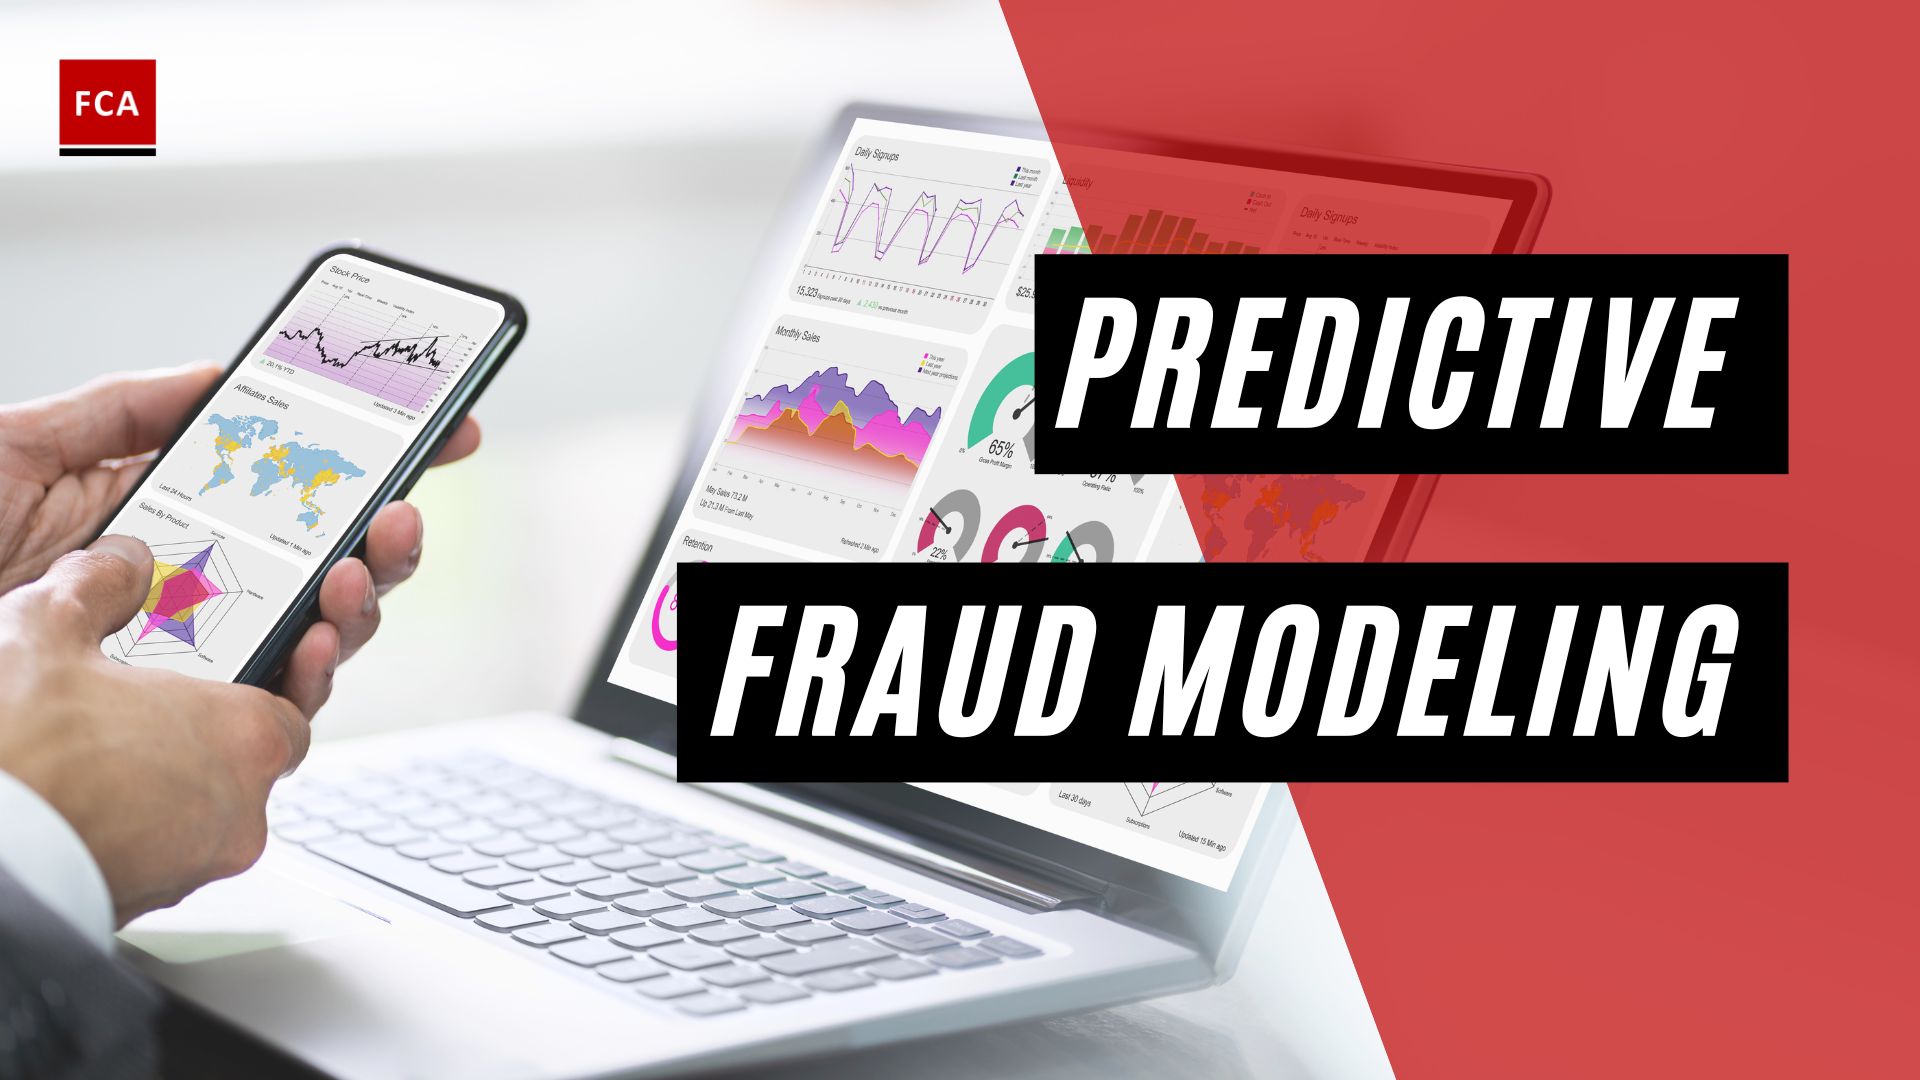 Predictive Fraud Modeling